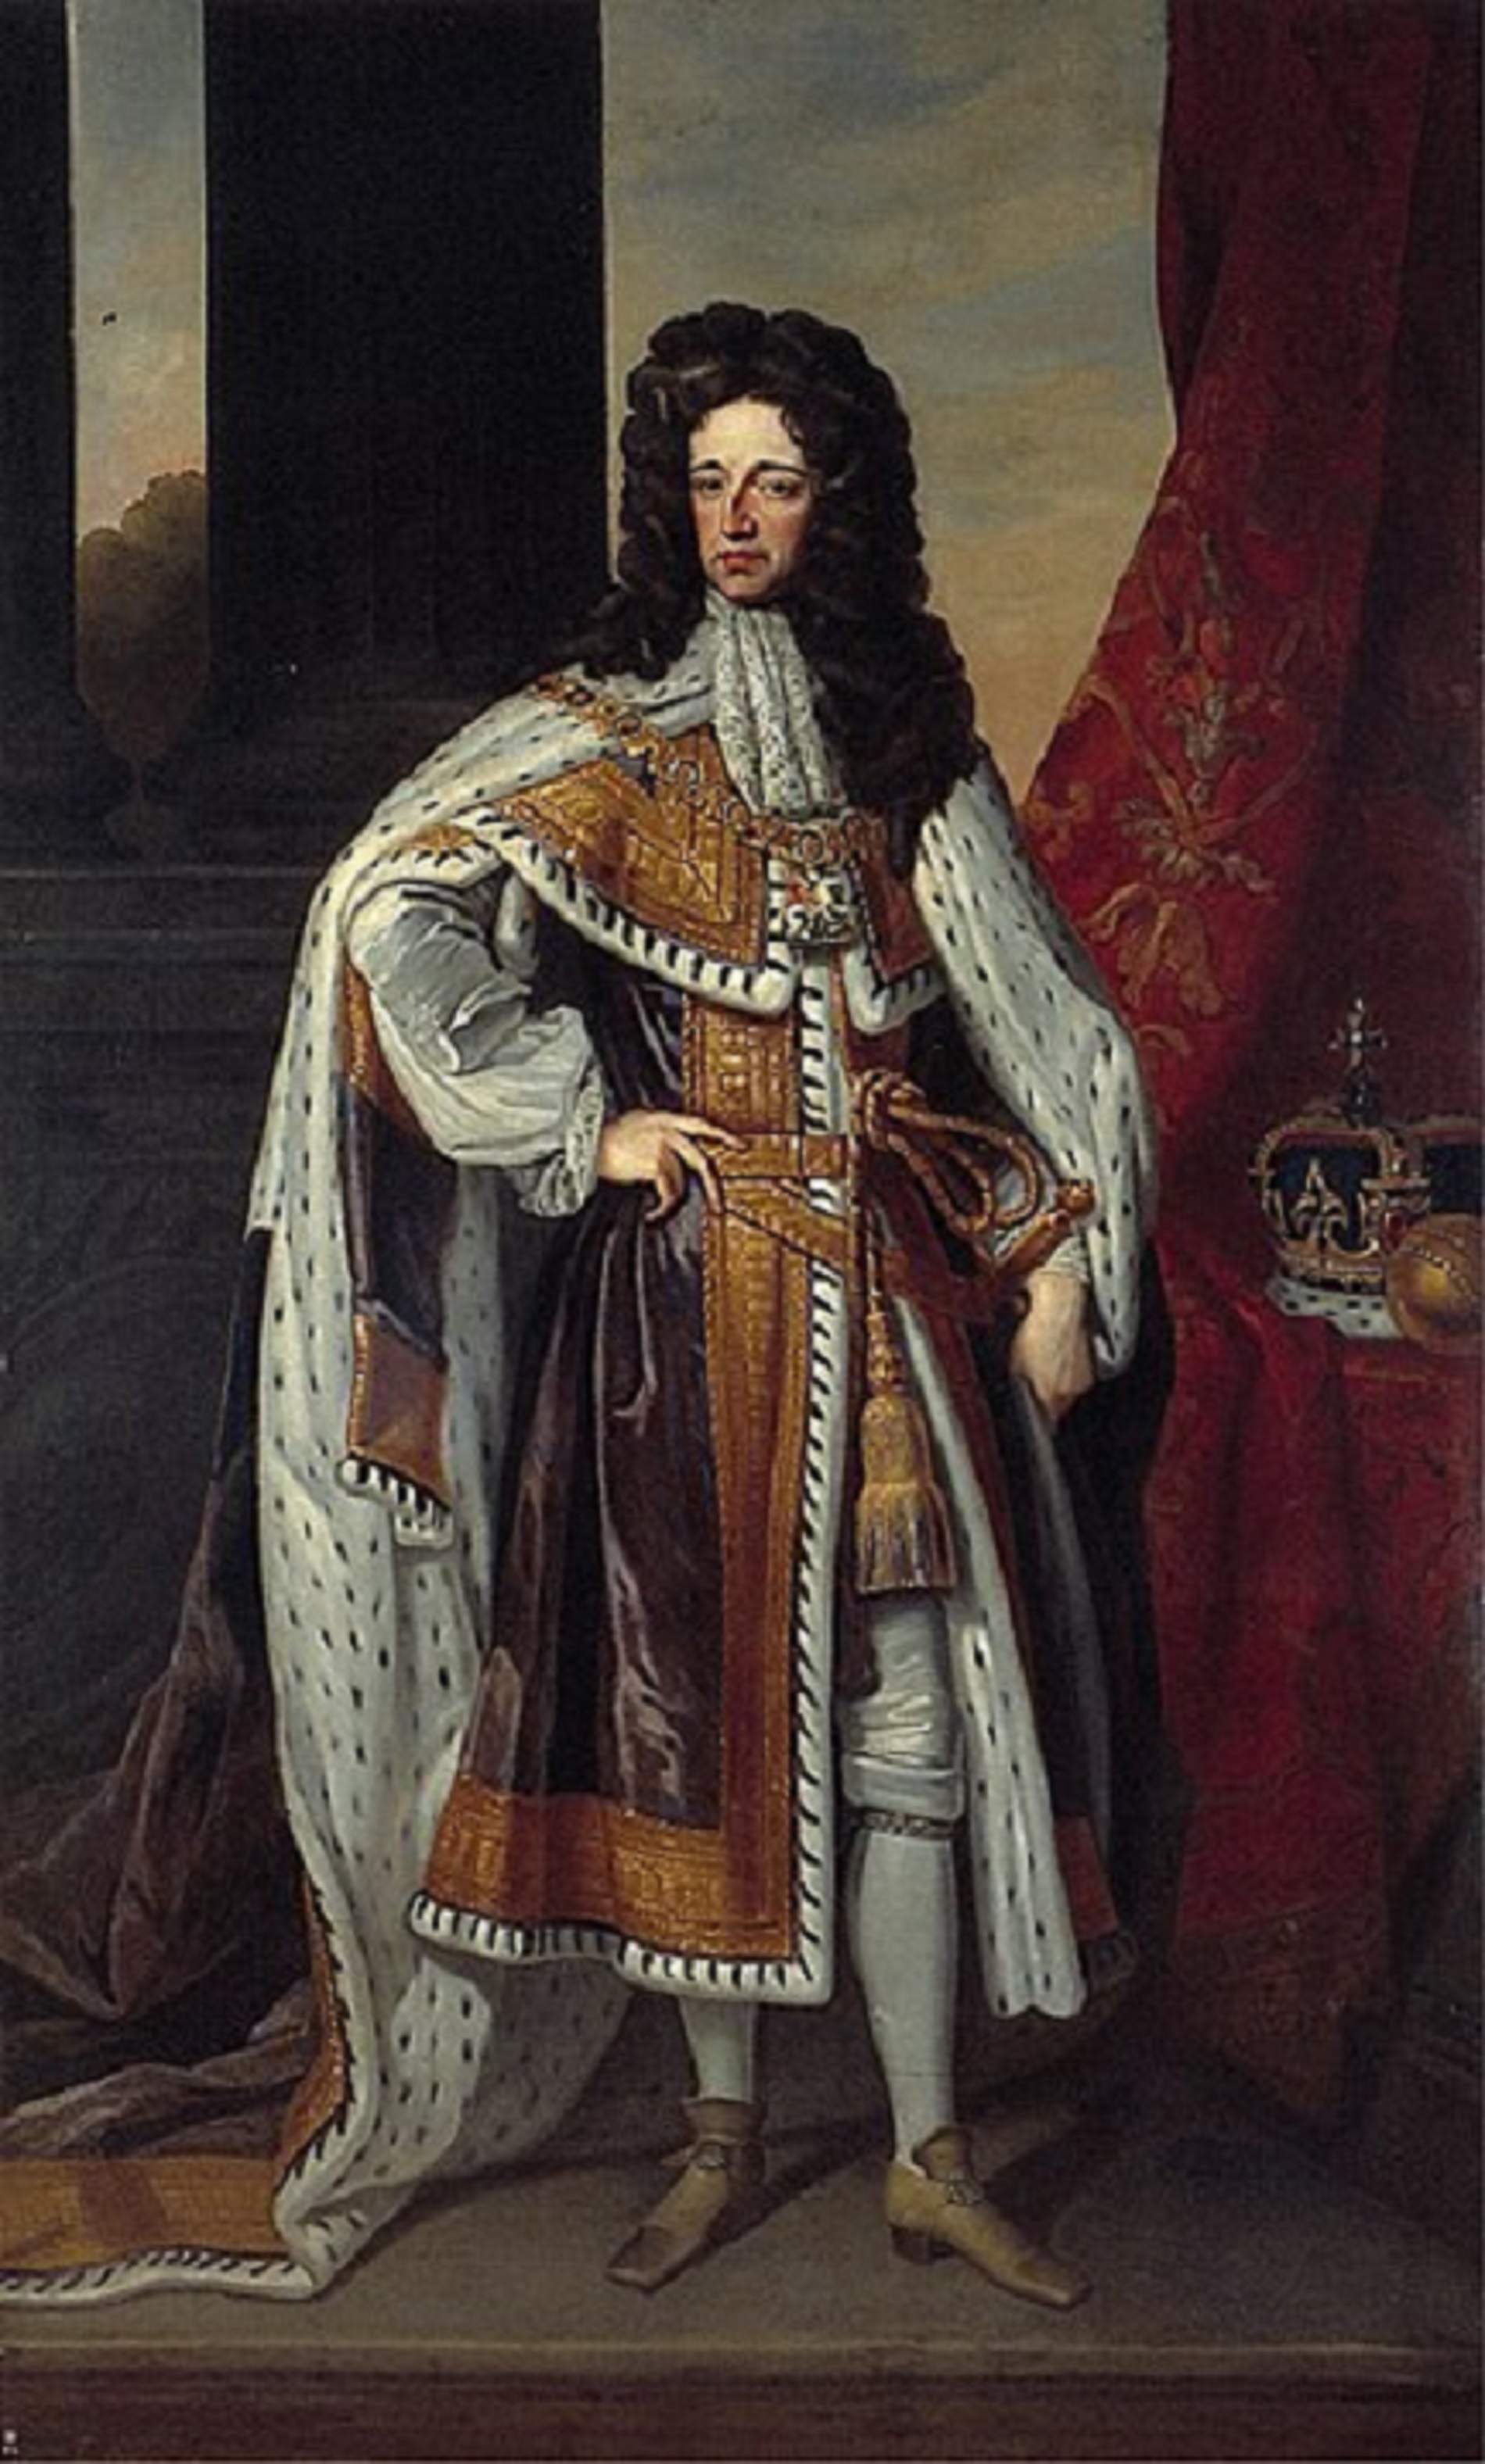 Muere Guillermo de Inglaterra, que planteaba restaurar la Corona catalanoaragonesa